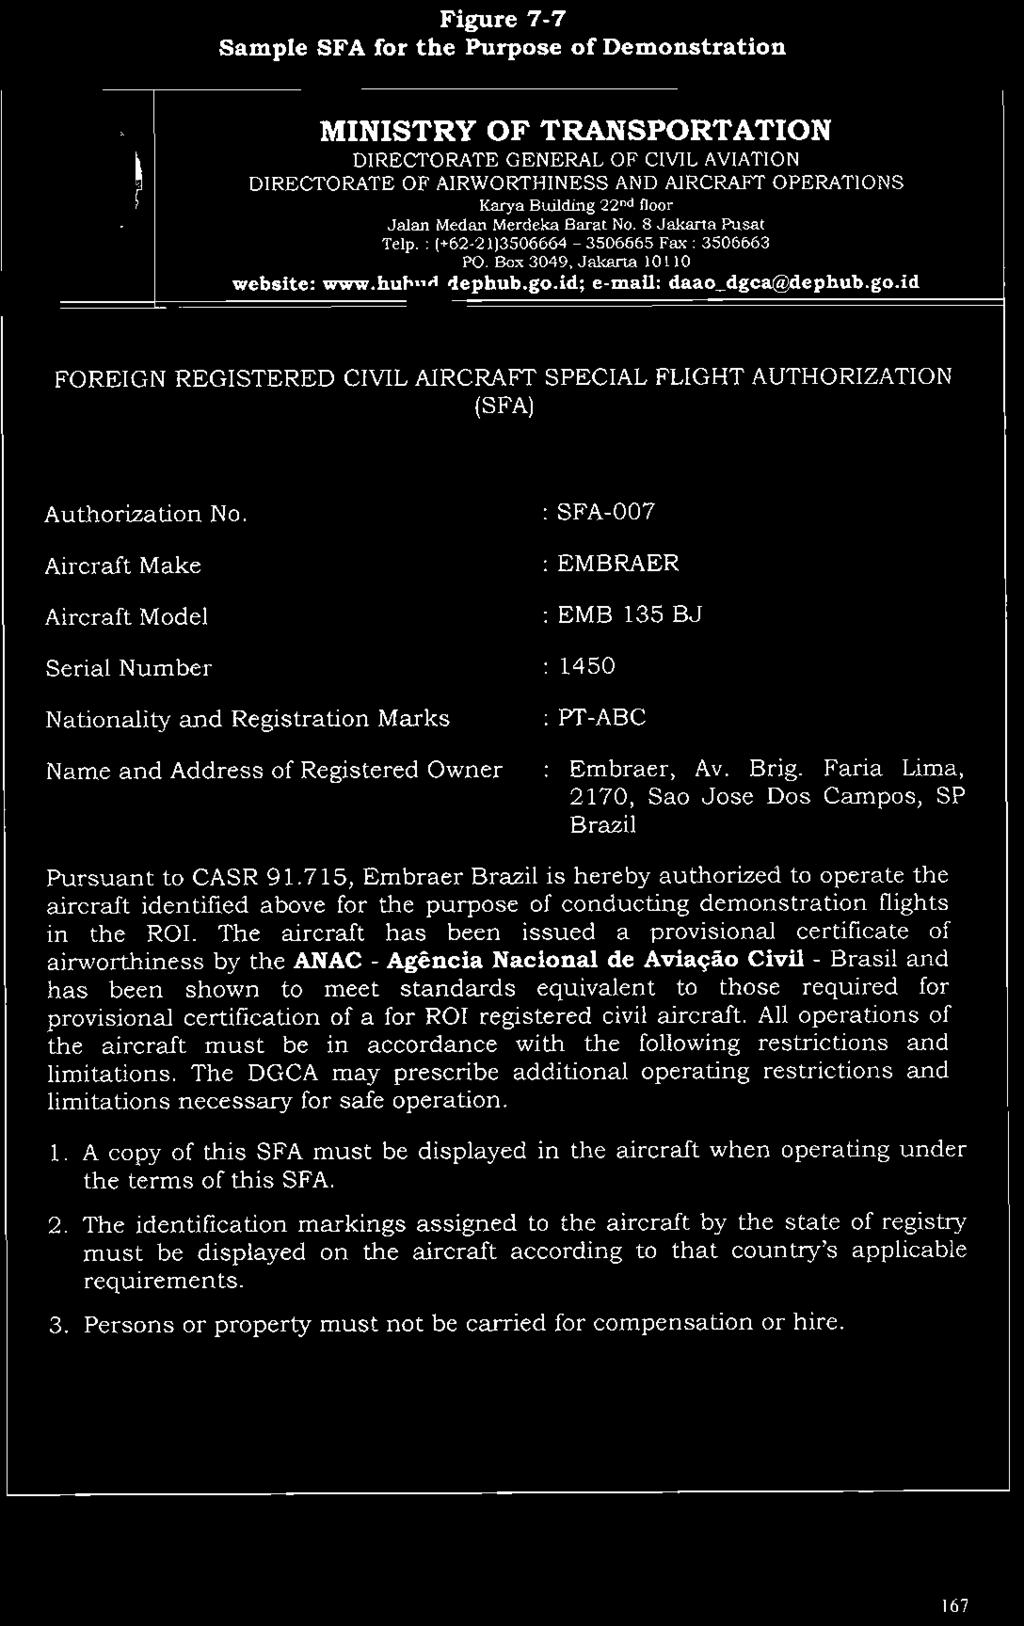 id; e-mail: daao dgcafodephub.go.id FOREIGN REGISTERED CIVIL AIRCRAFT SPECIAL FLIGHT AUTHORIZATION (SFA) Authorization No.